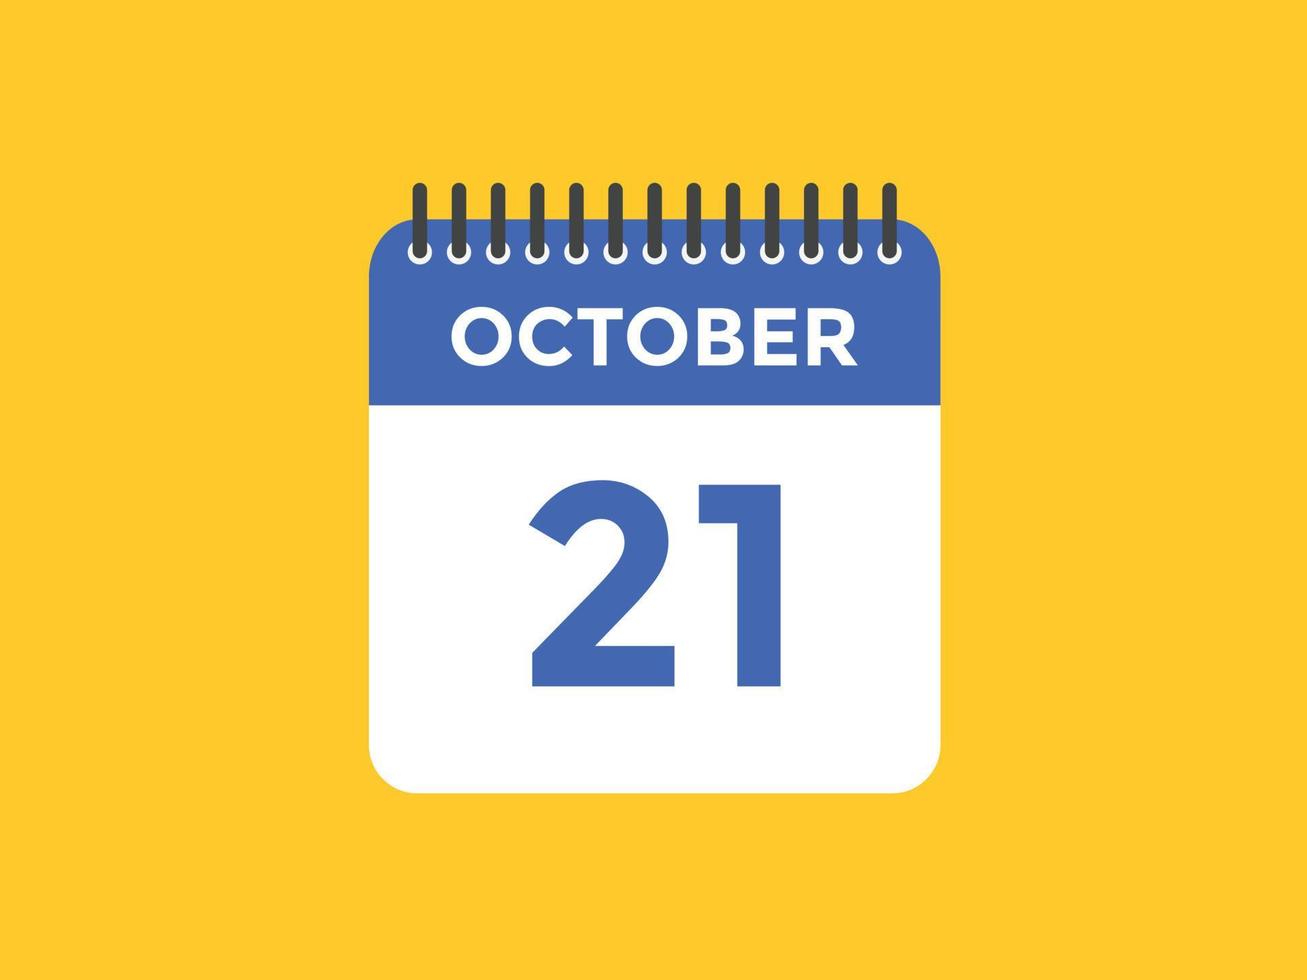 october 21 calendar reminder. 21th october daily calendar icon template. Calendar 21th october icon Design template. Vector illustration